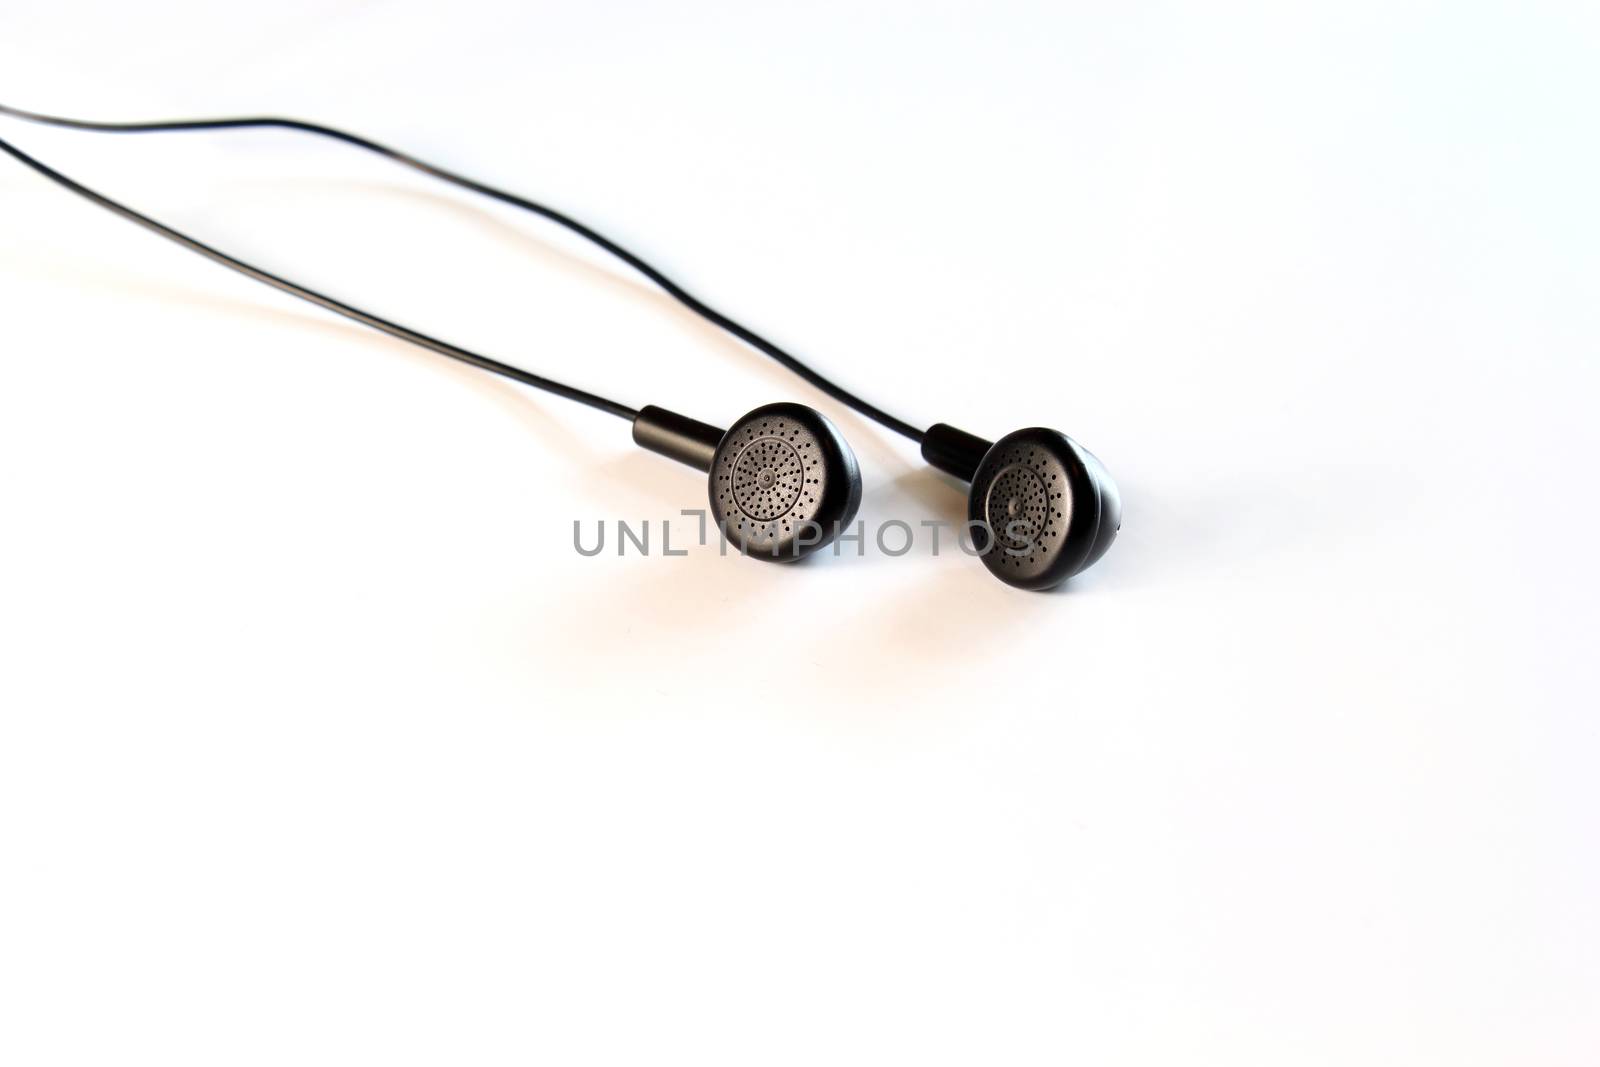 Black earphones on white by dynamicfoto